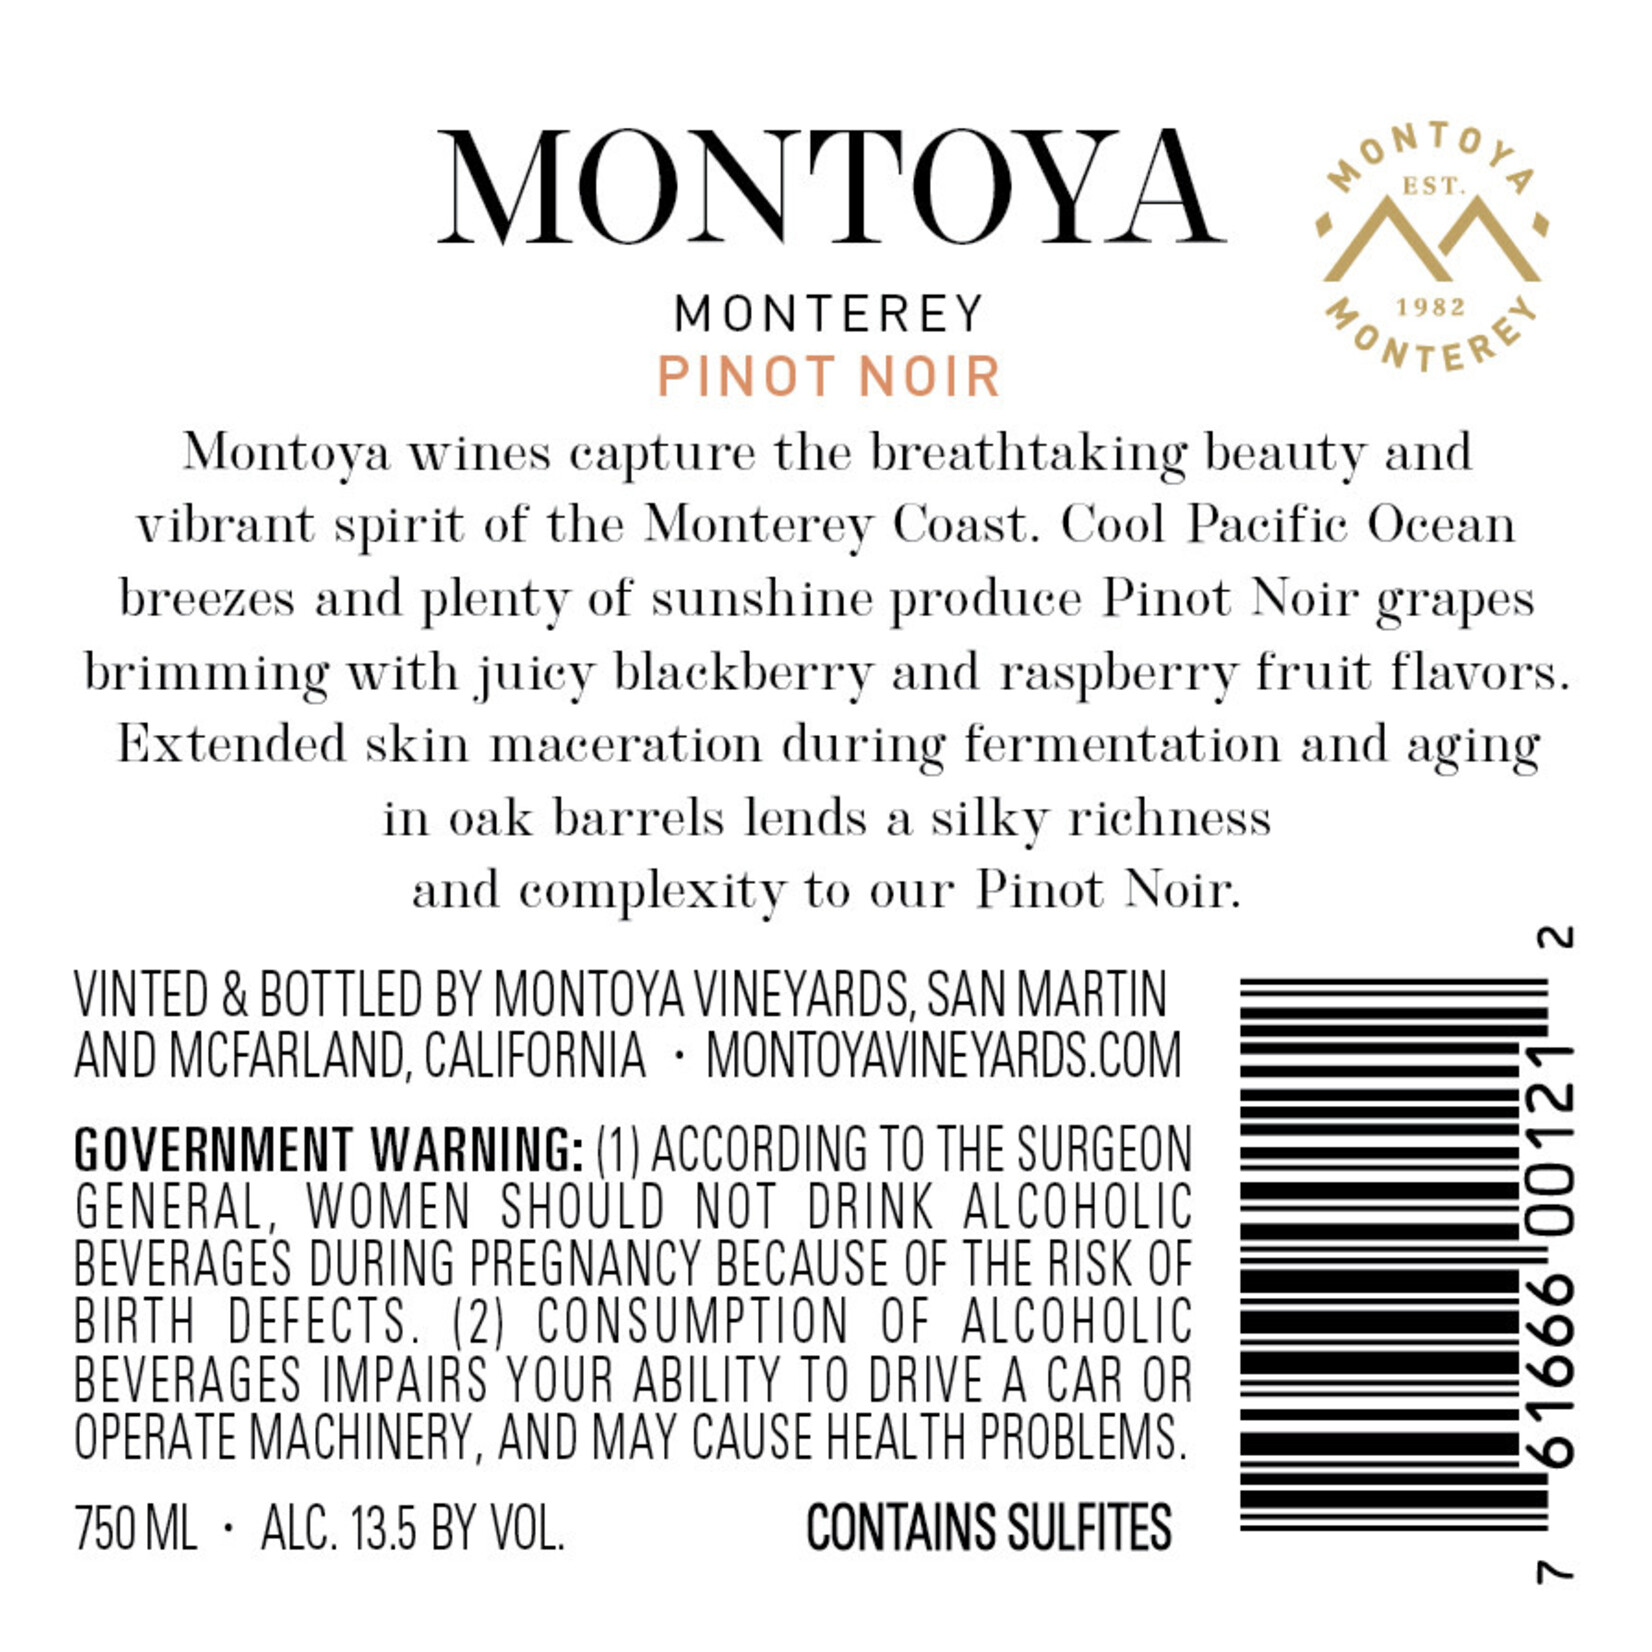 Montoya Montoya Monterey Pinot Noir 2020  California